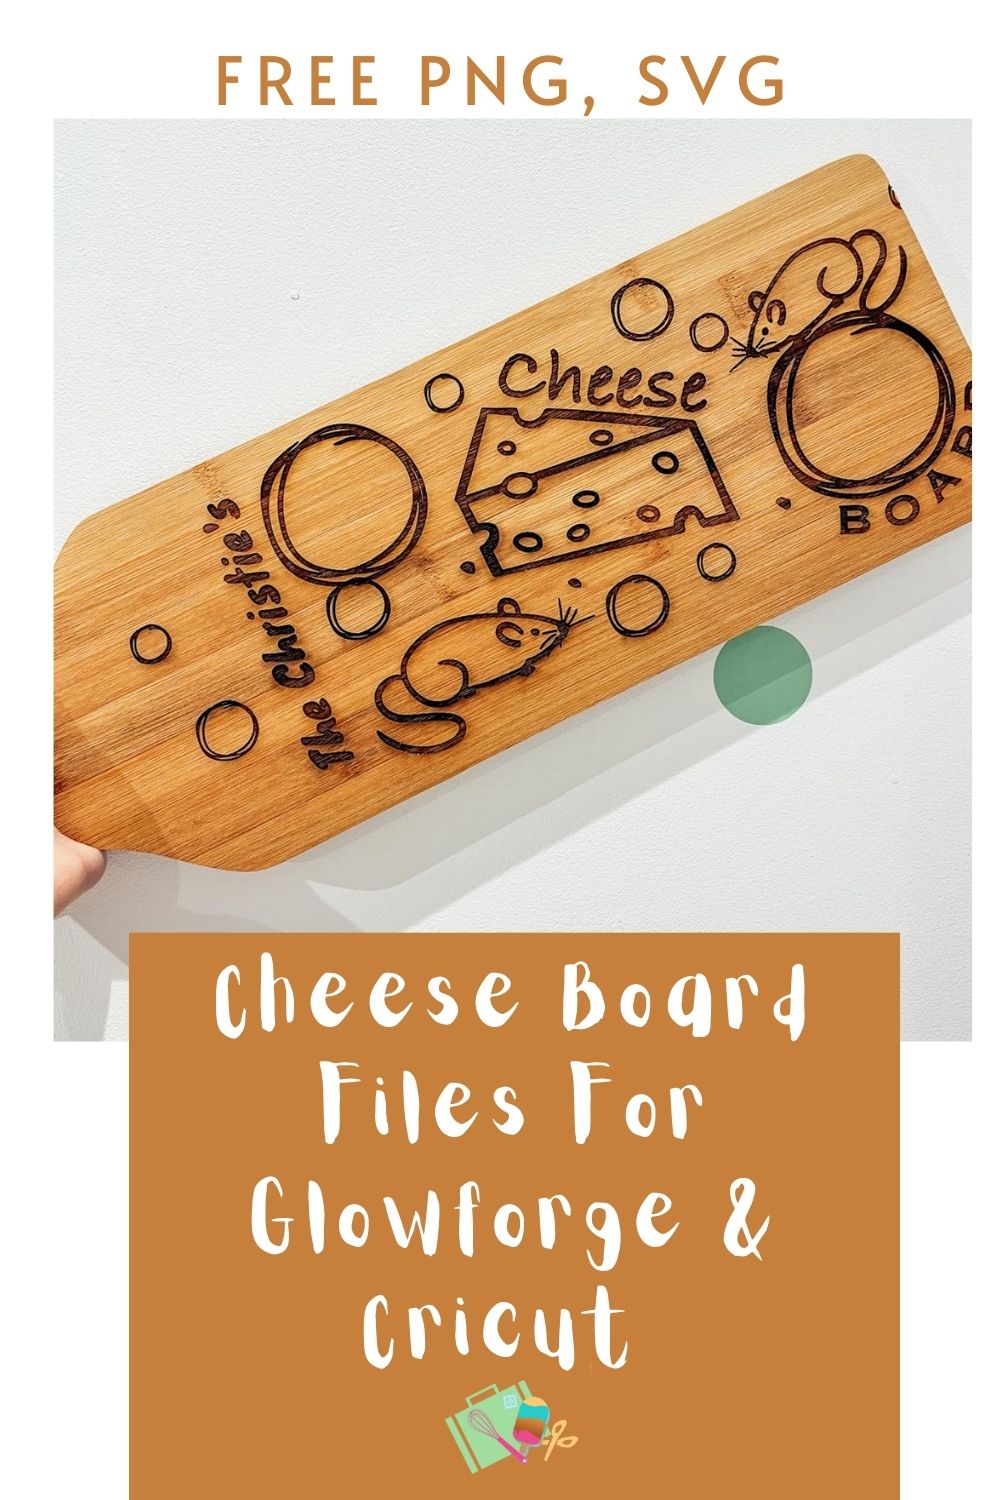 Free Cheese Board Files for Glowforge and Cricut